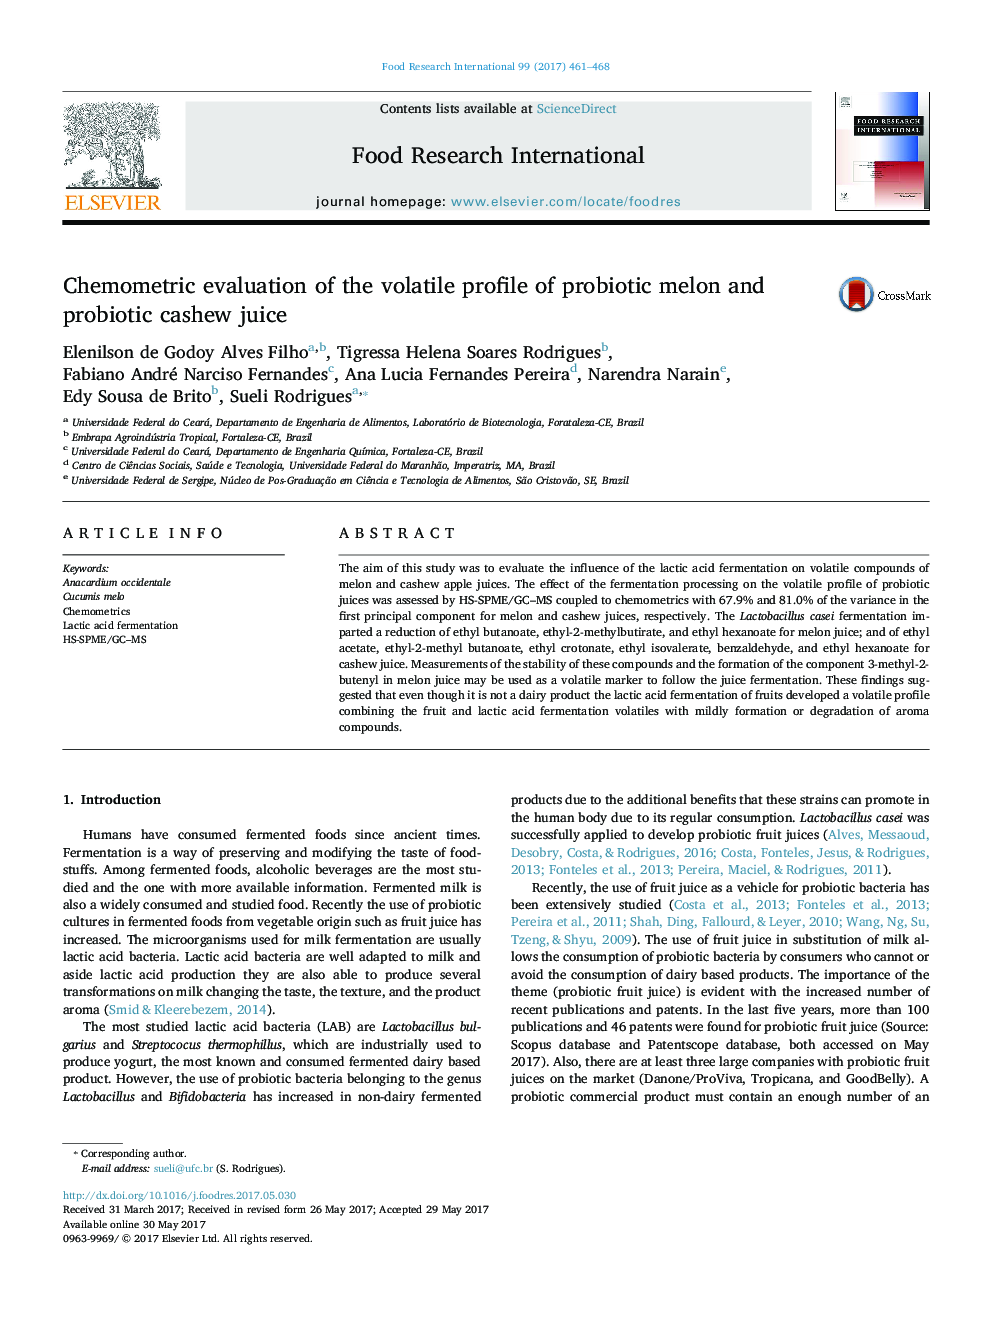 Chemometric evaluation of the volatile profile of probiotic melon and probiotic cashew juice